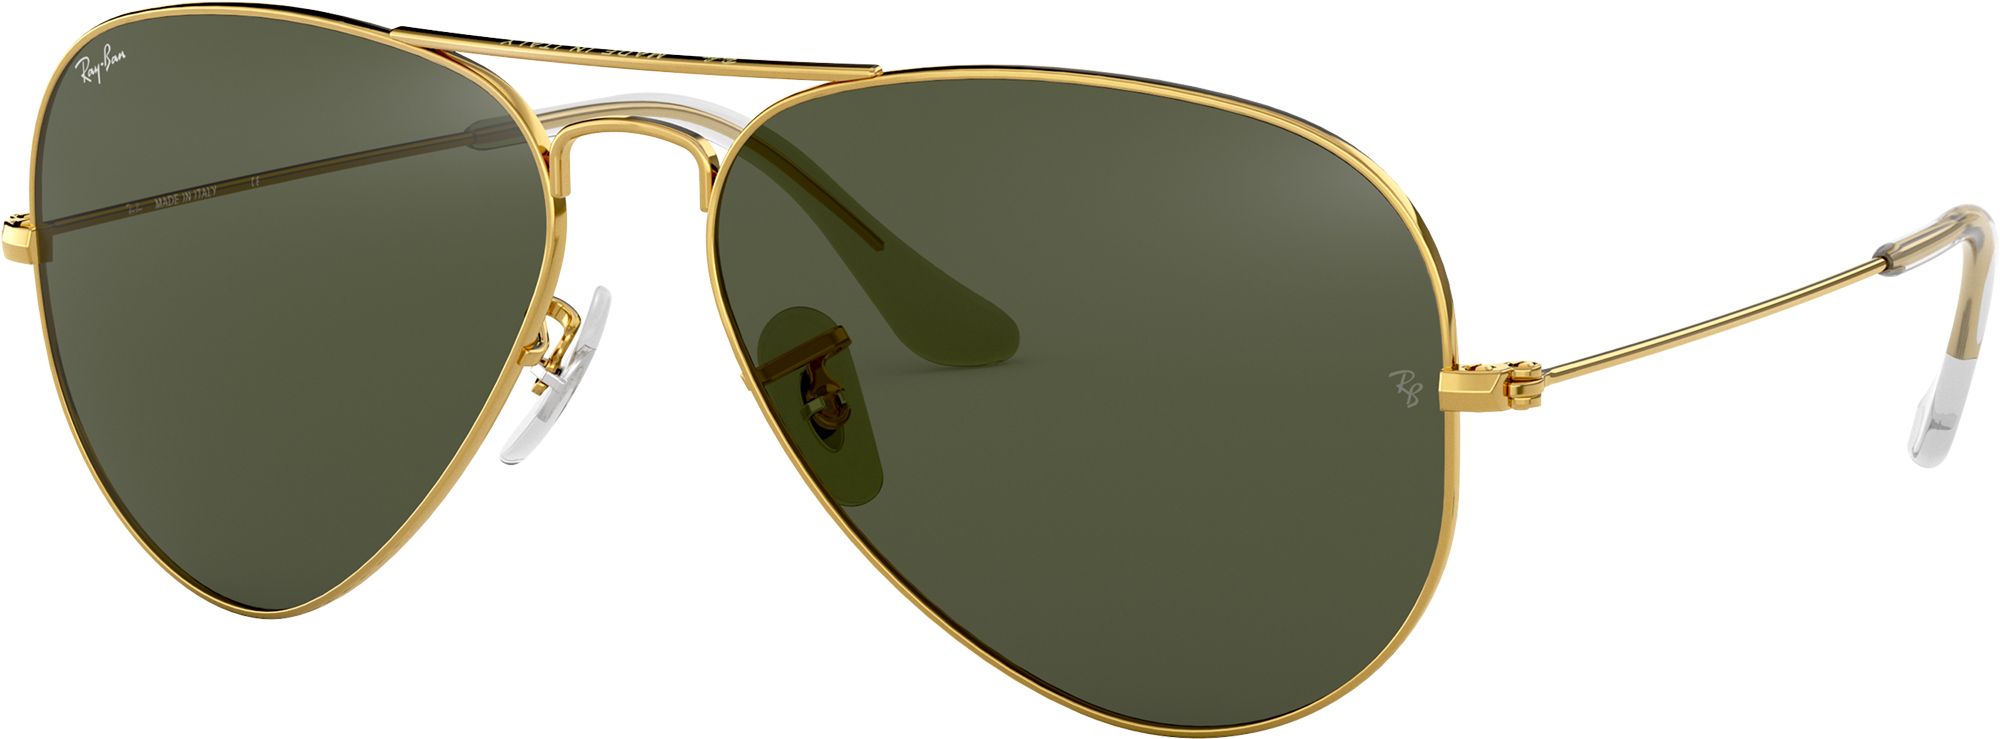 Photos - Sunglasses Ray-Ban Aviator , Men's, Gold/Green | Father's Day Gift Idea 16R 